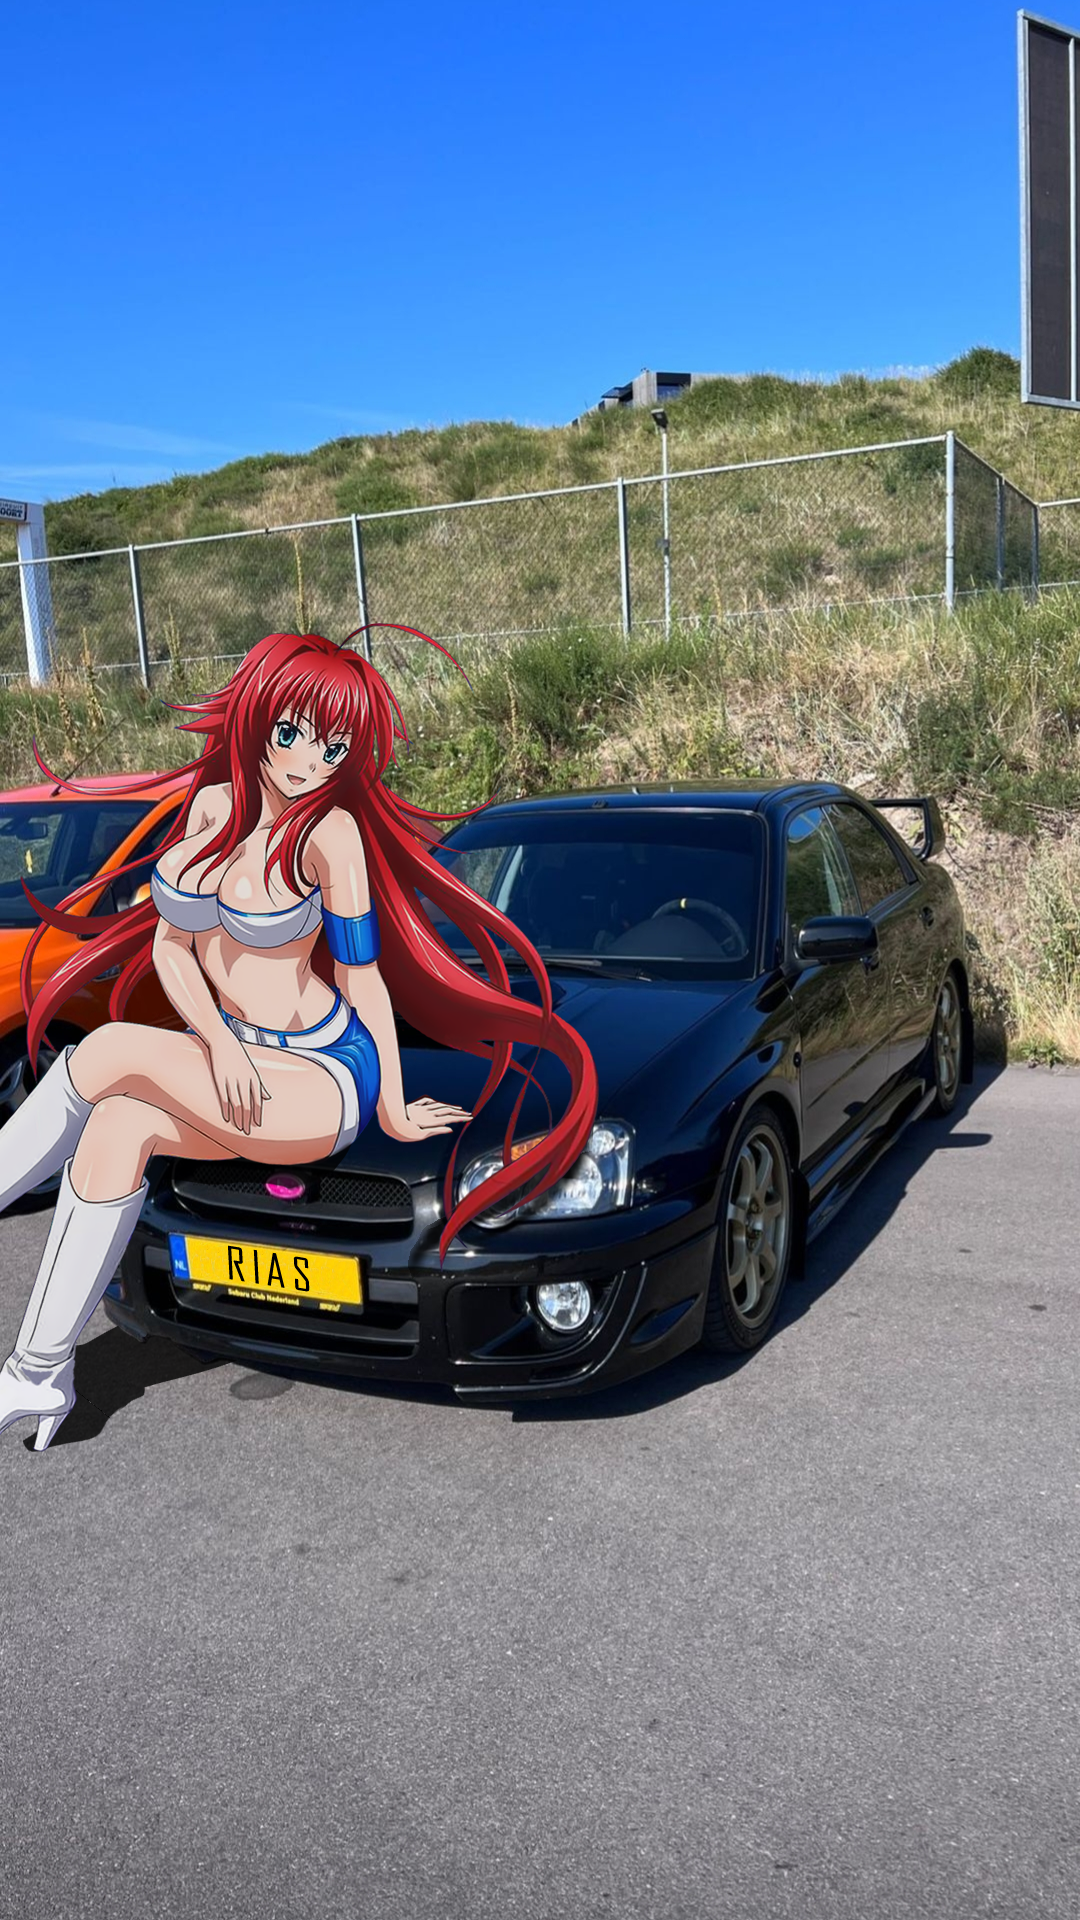 Anime 1080x1920 Gremory Rias Subaru Impreza jdmxanime Japanese cars anime girls car skimpy clothes big boobs